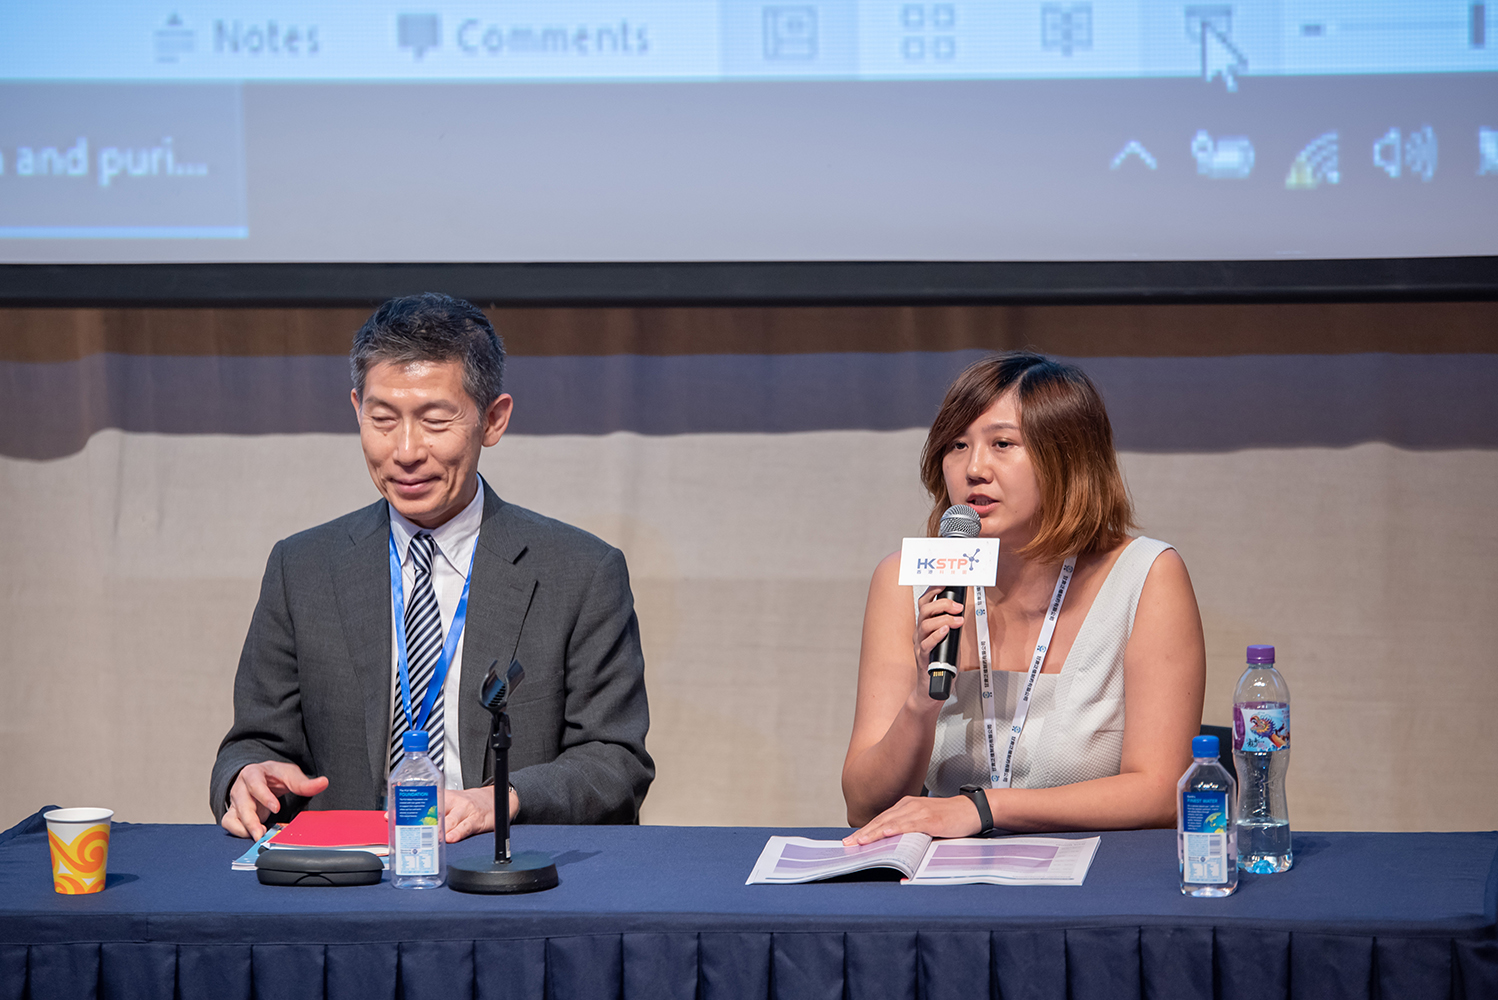 香港科學園舉辦之國際論壇<br>
        International Forum held in Hong Kong Science Park (HKSTP)
        